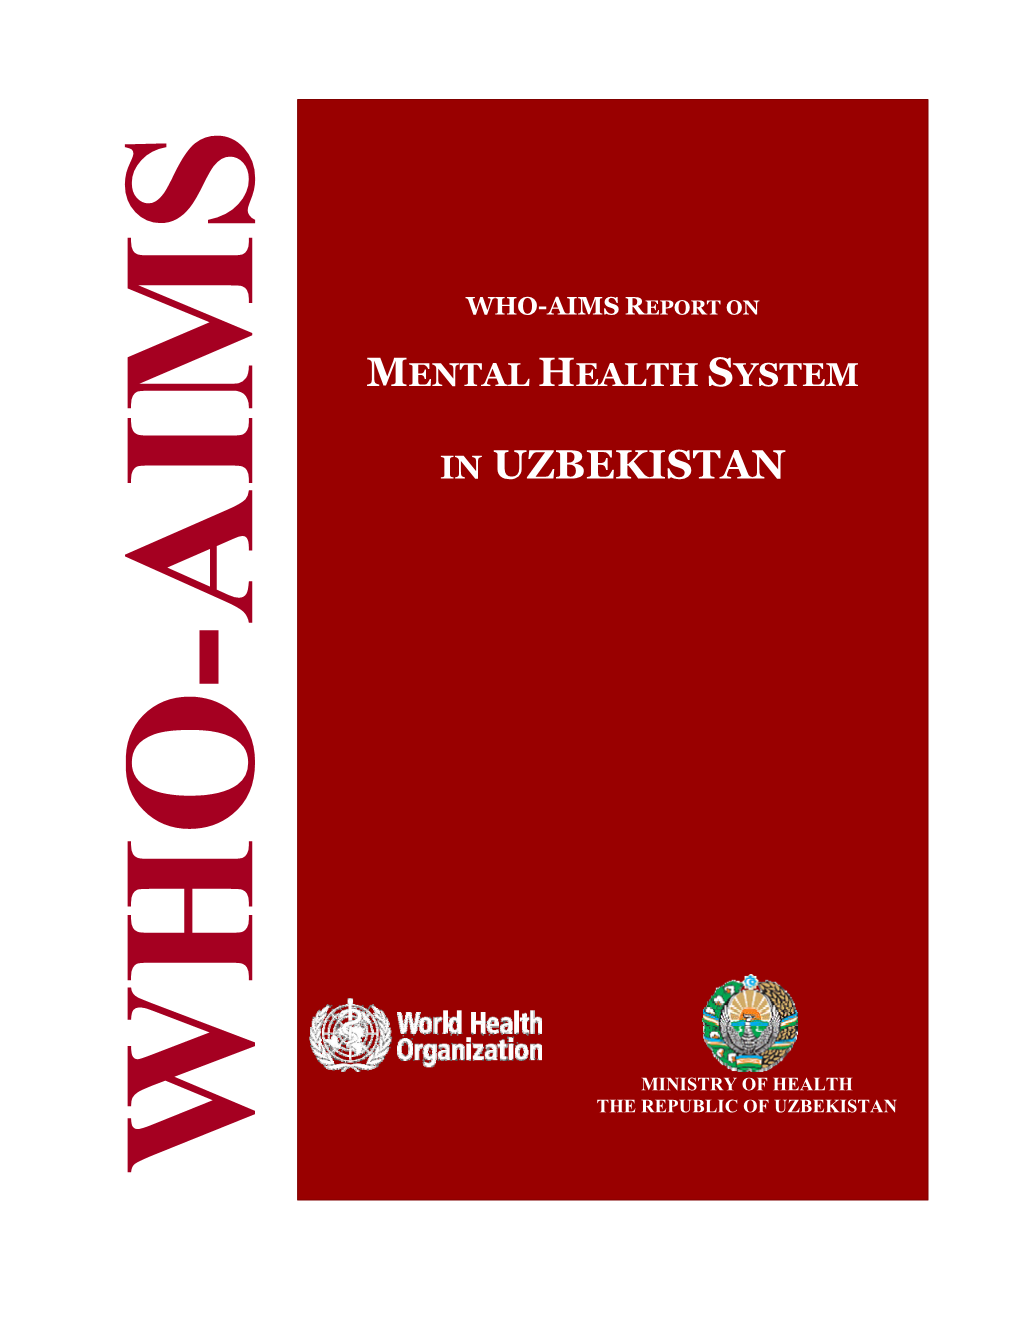 AIMS Report on Mental Health System in Uzbekistan, WHO and Ministry of Health, Tashkent, Uzbekistan, 2007)